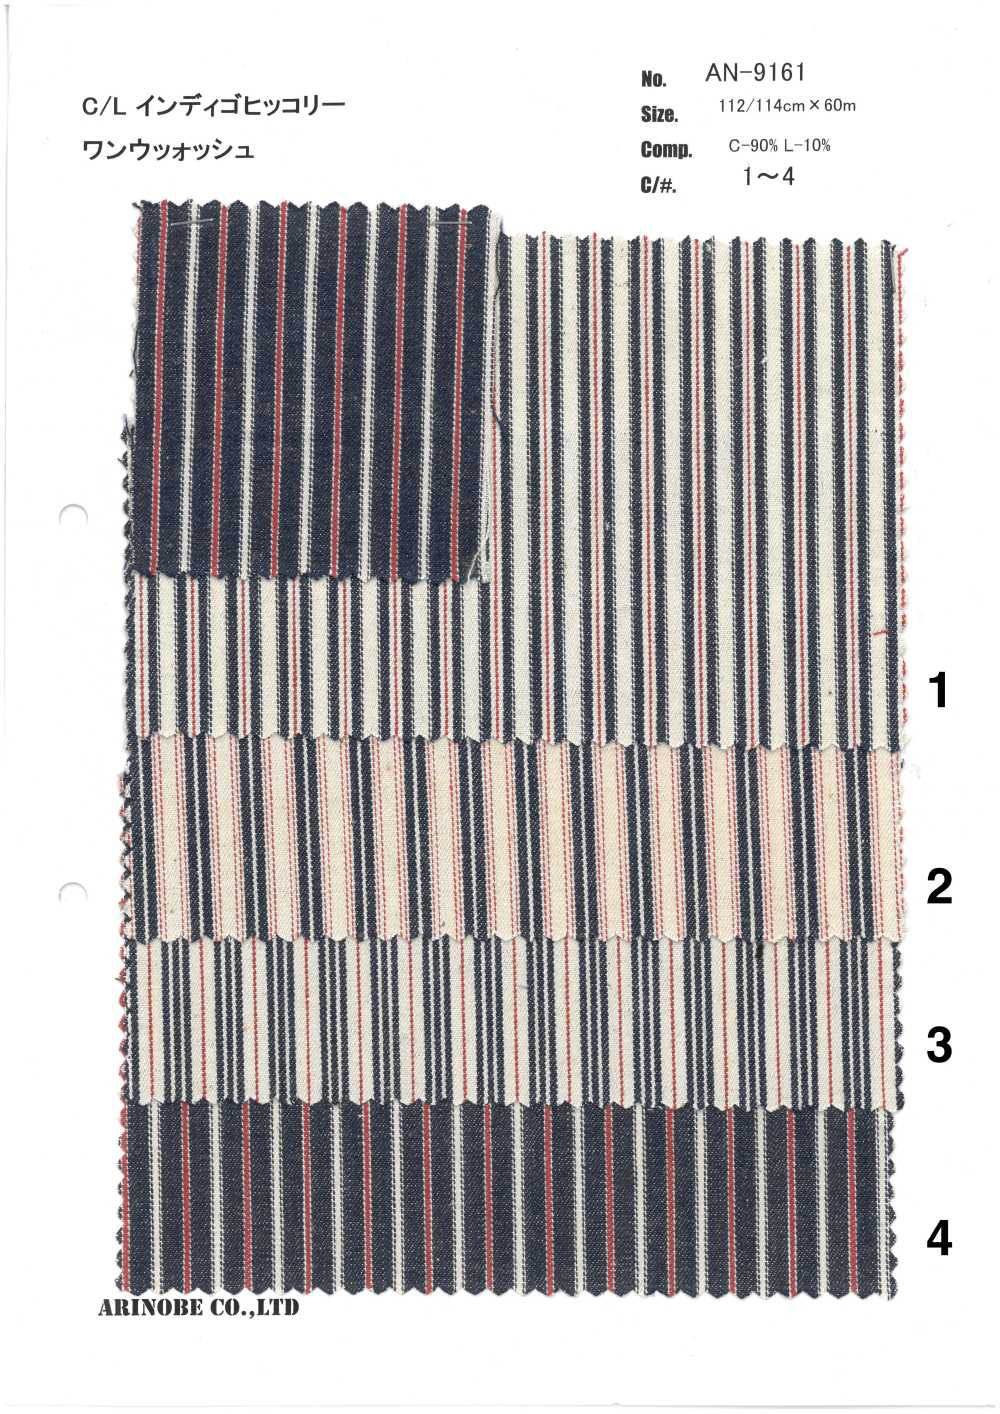 AN-9161 Nogal índigo De Lino[Fabrica Textil] ARINOBE CO., LTD.